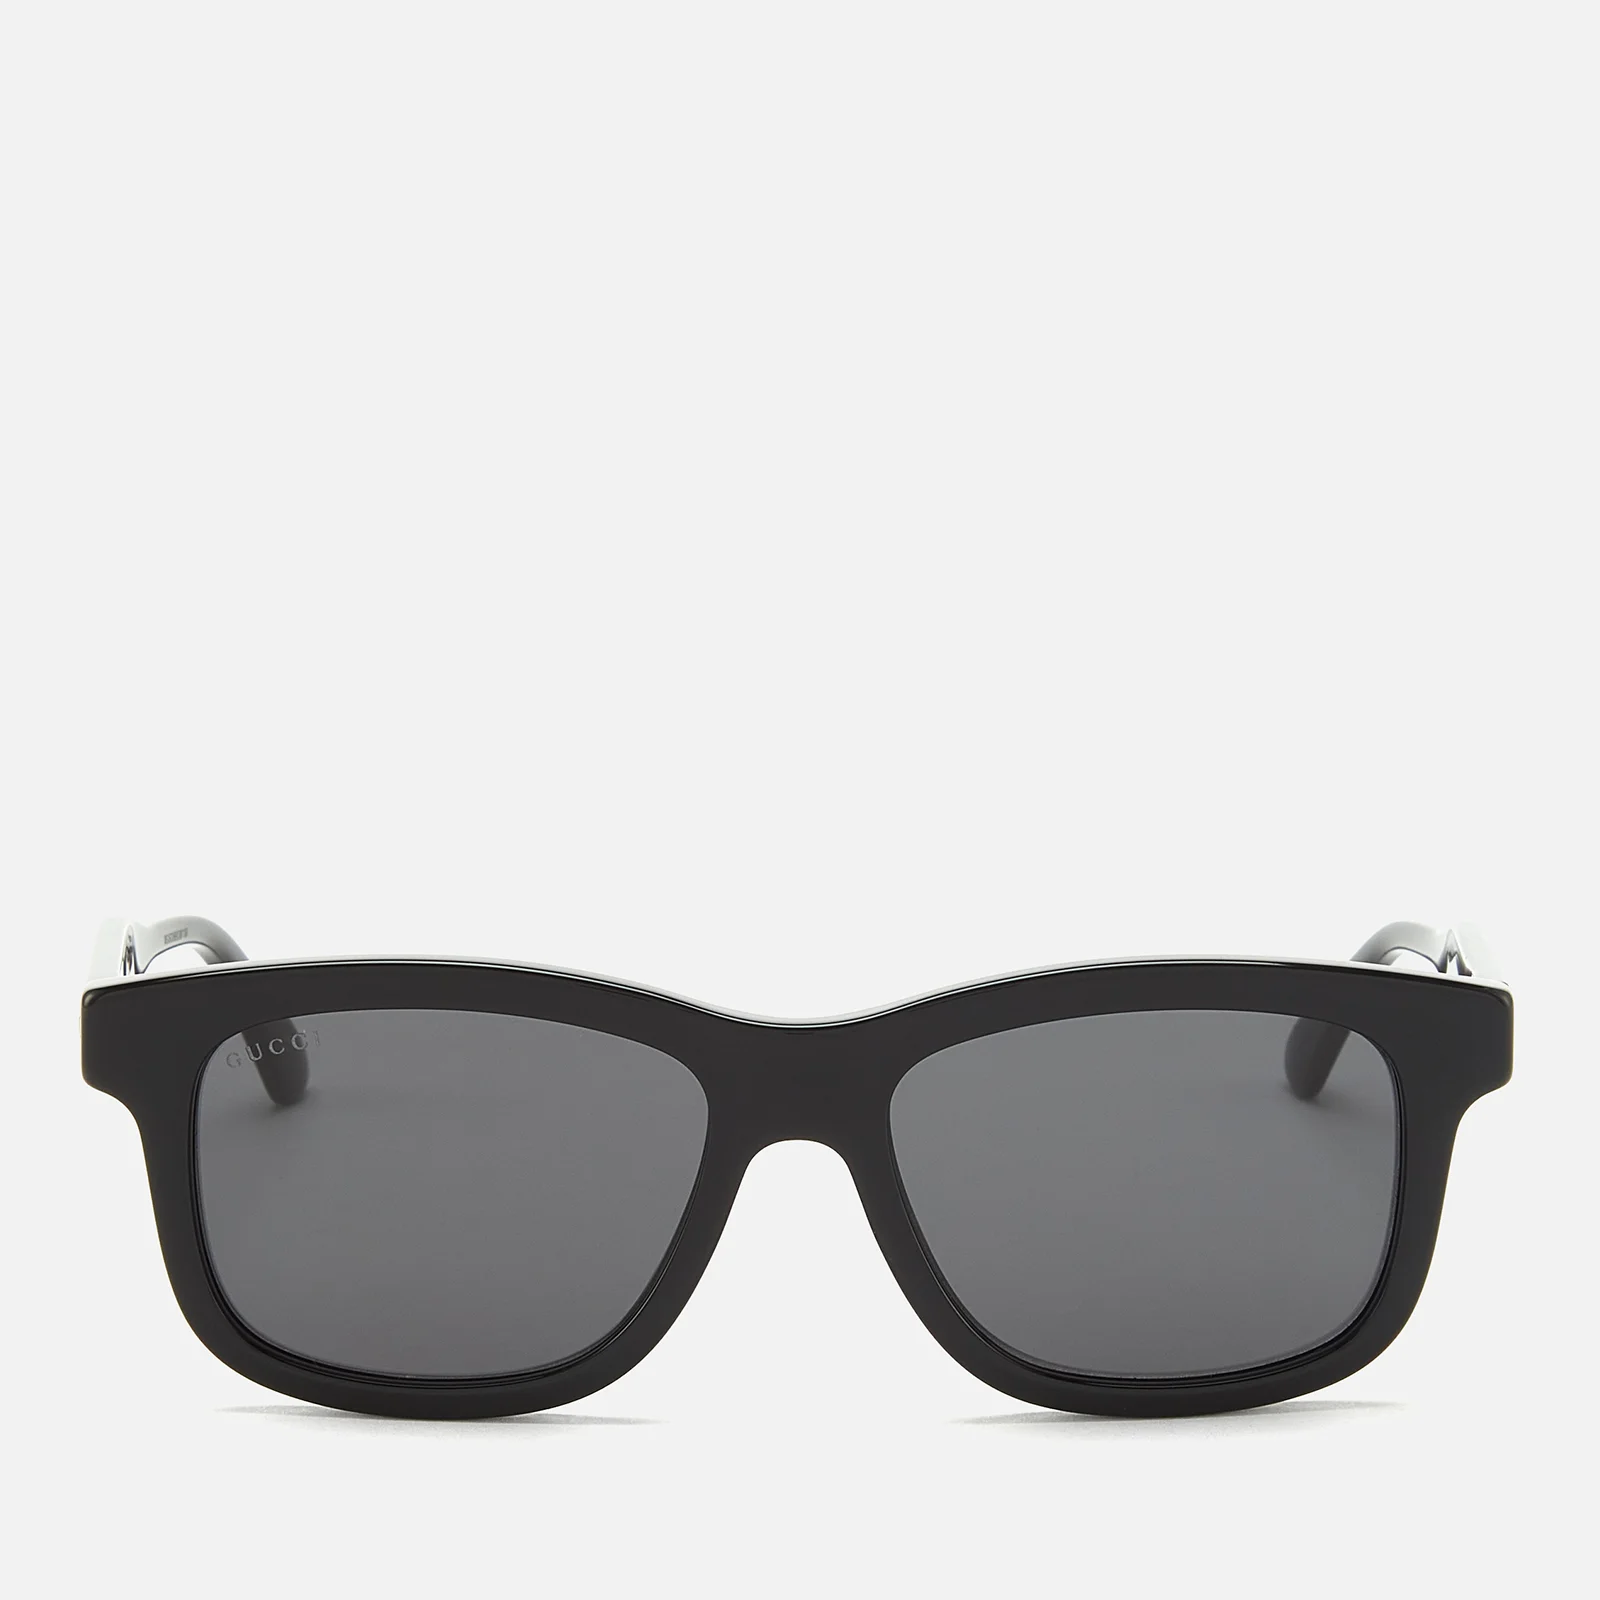 Gucci Men's Acetate Frame Sunglasses - Solid Black Image 1